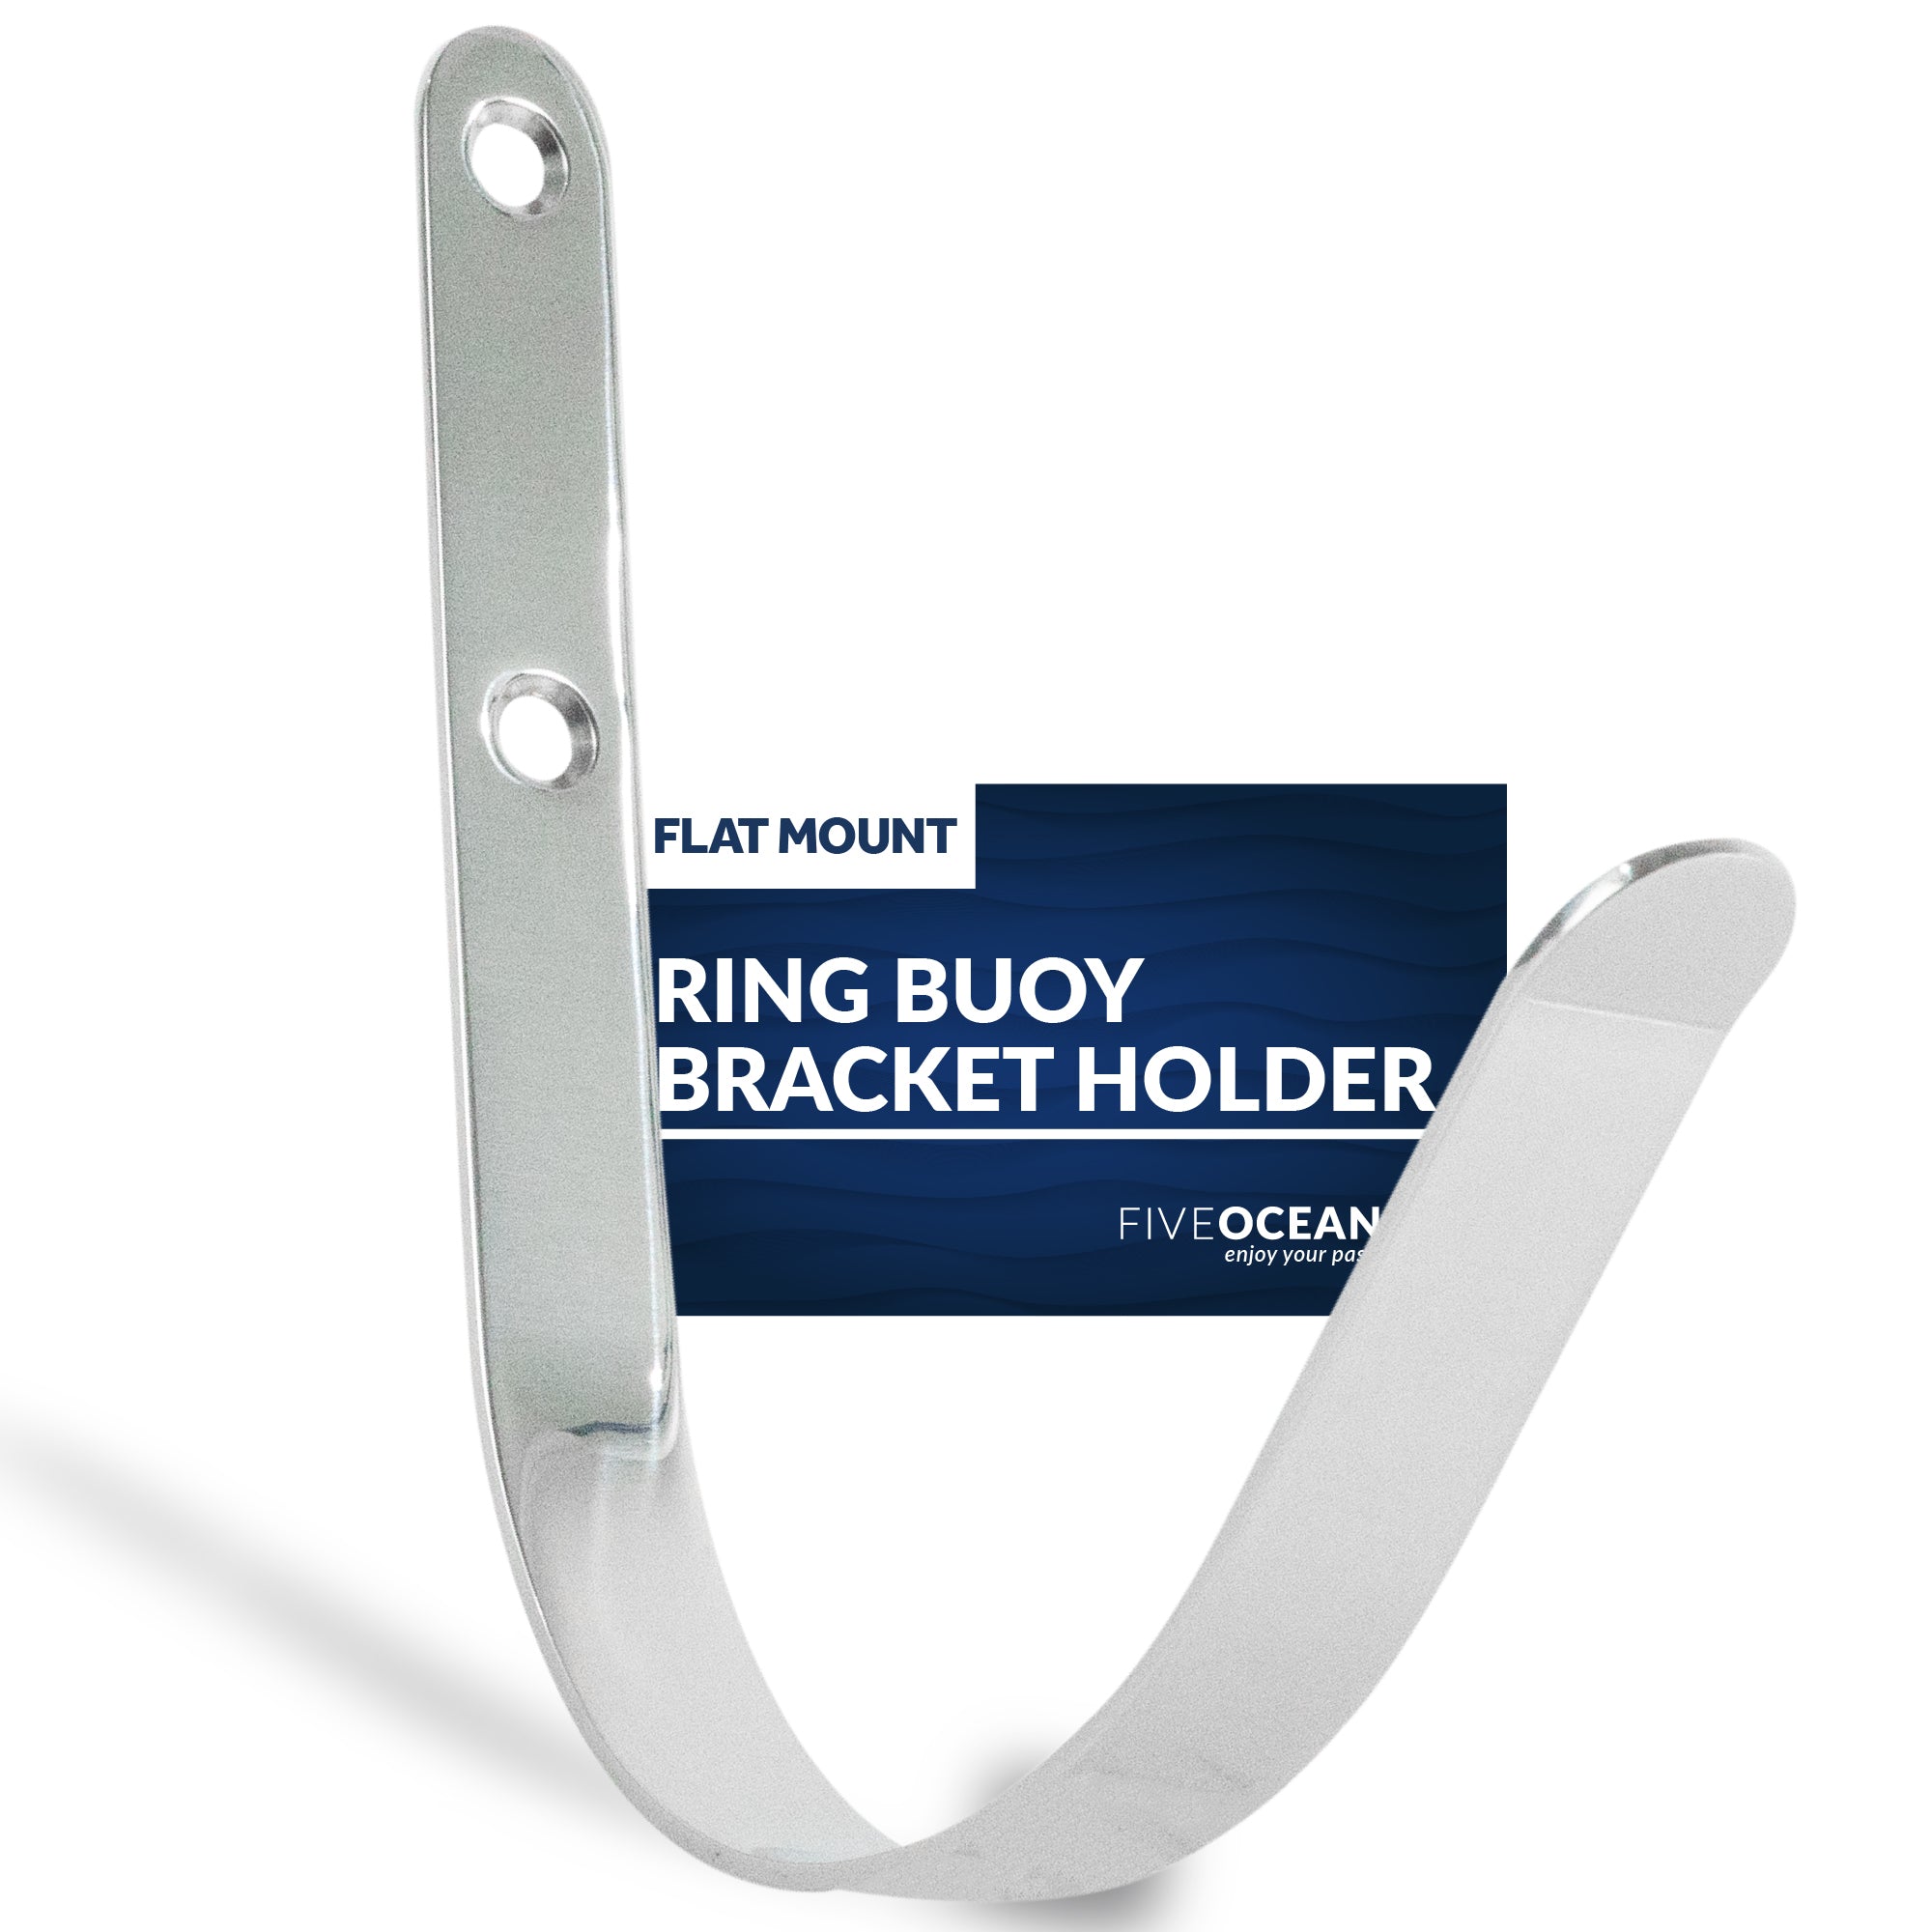 Ring Buoy Bracket Holder, Stainless Steel, Flat Mount - FO626